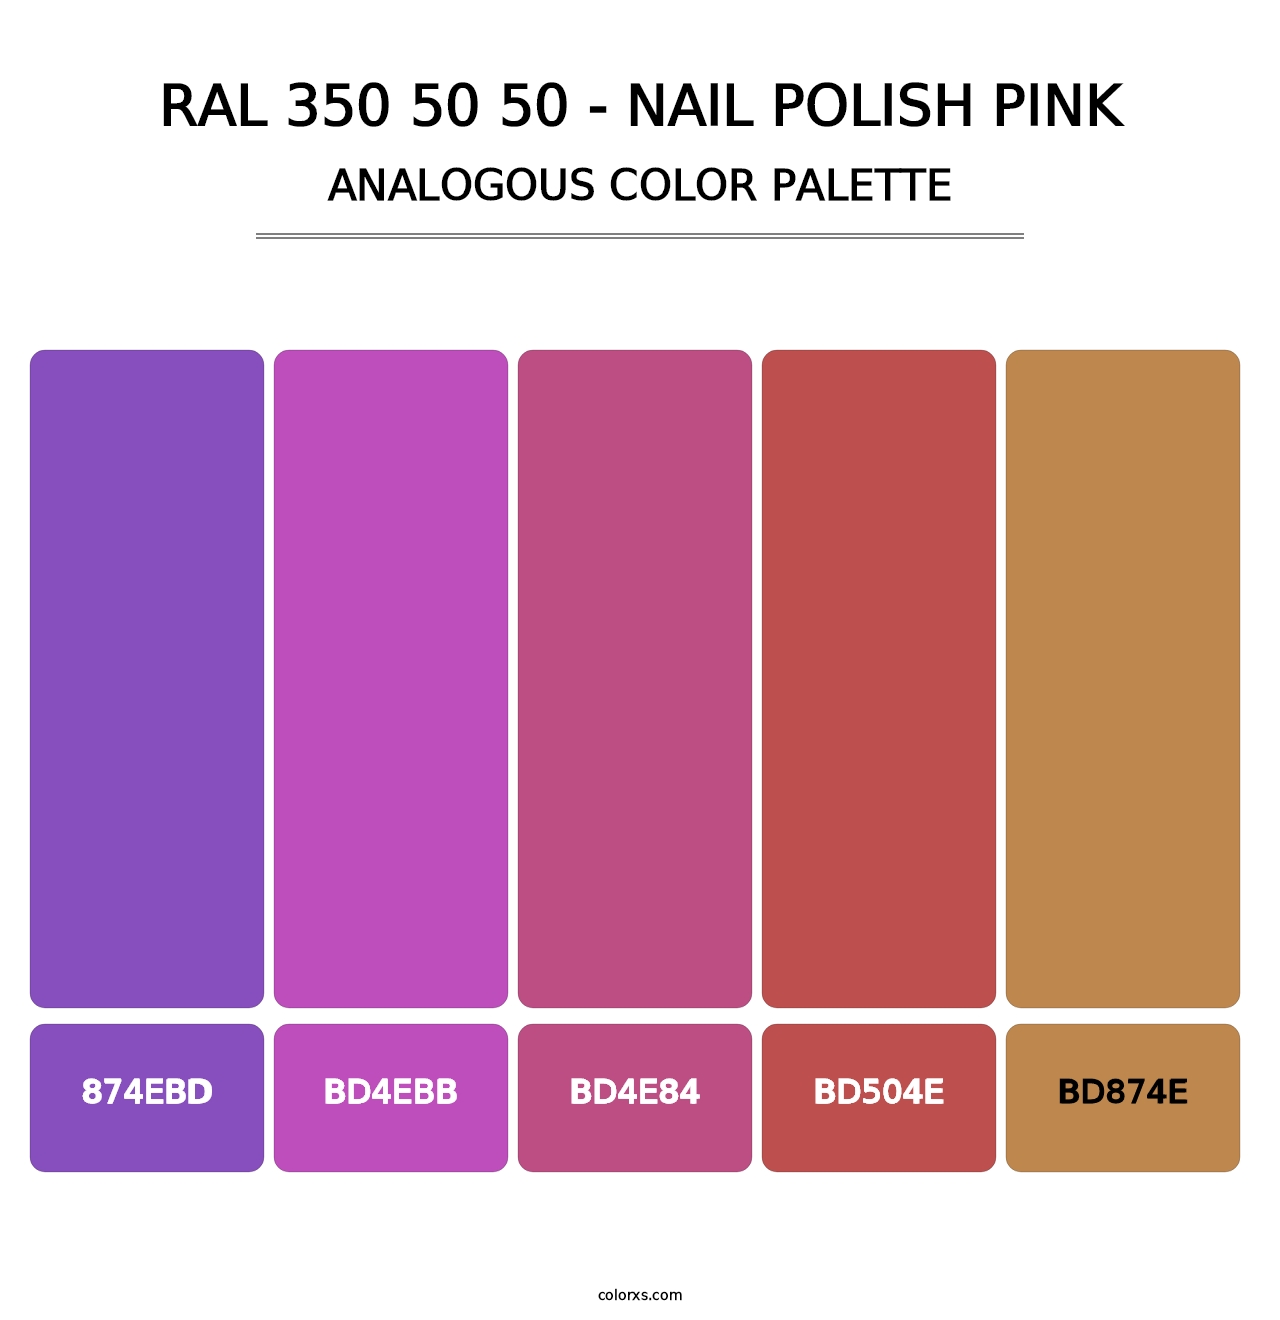 RAL 350 50 50 - Nail Polish Pink - Analogous Color Palette